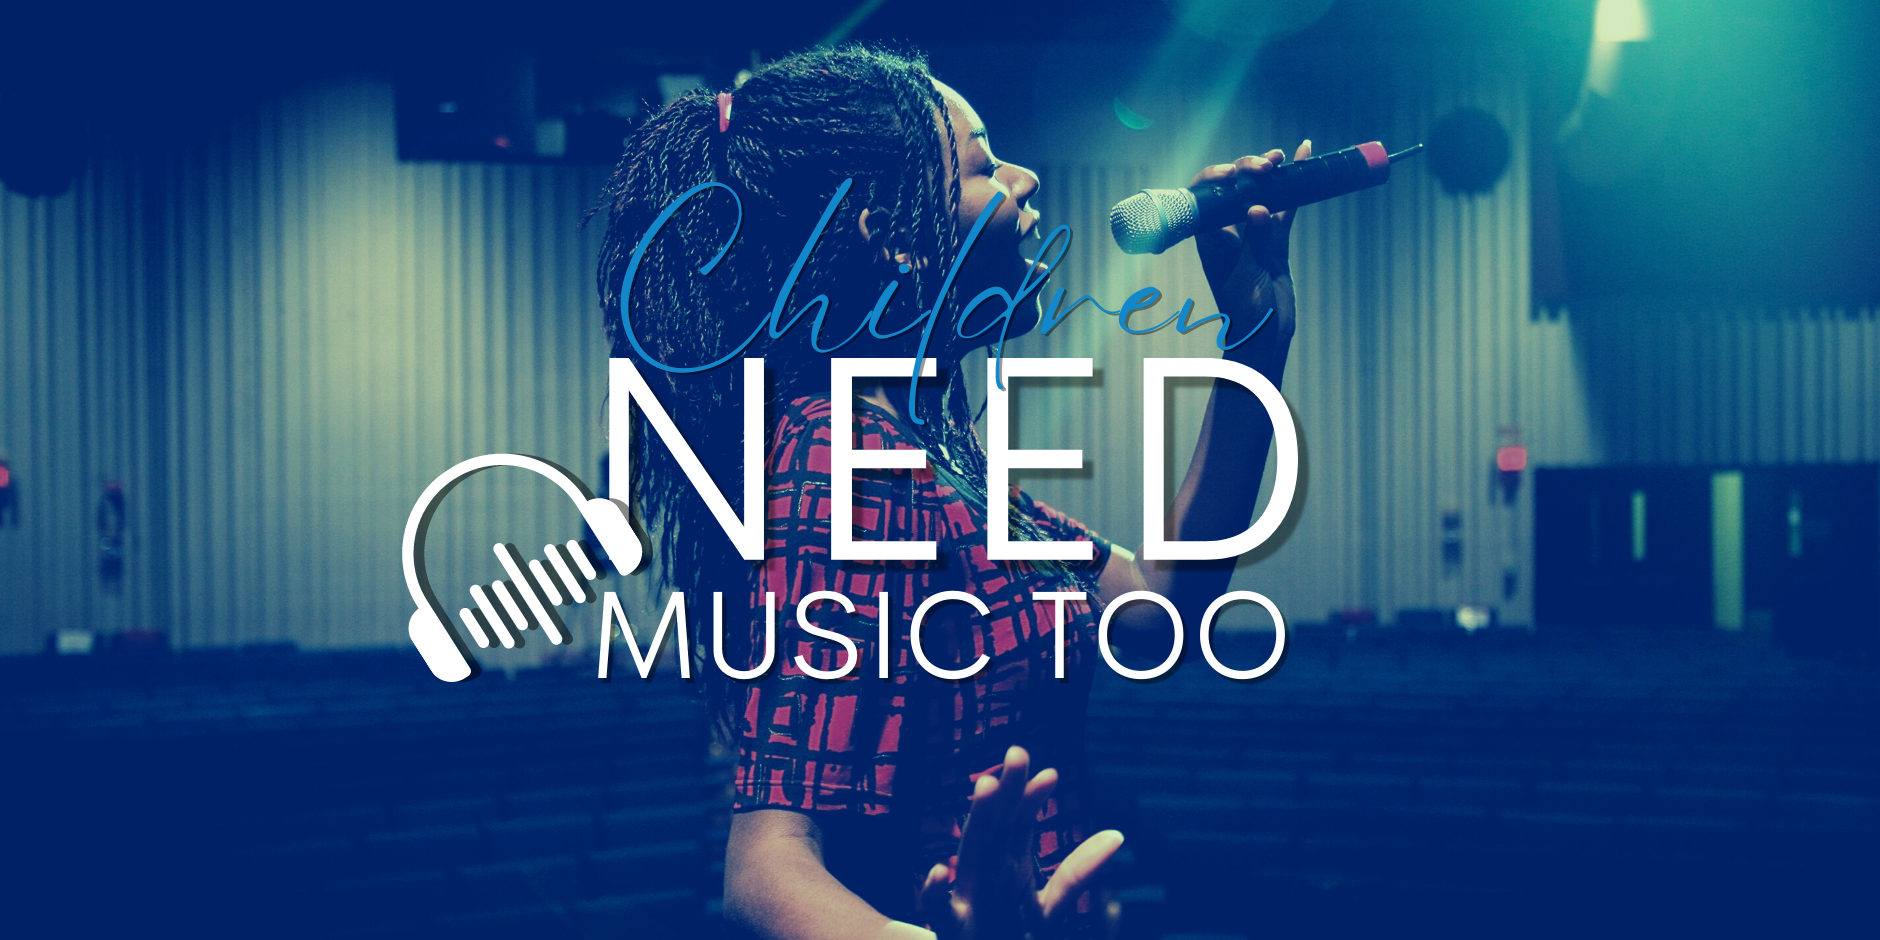 Need music too